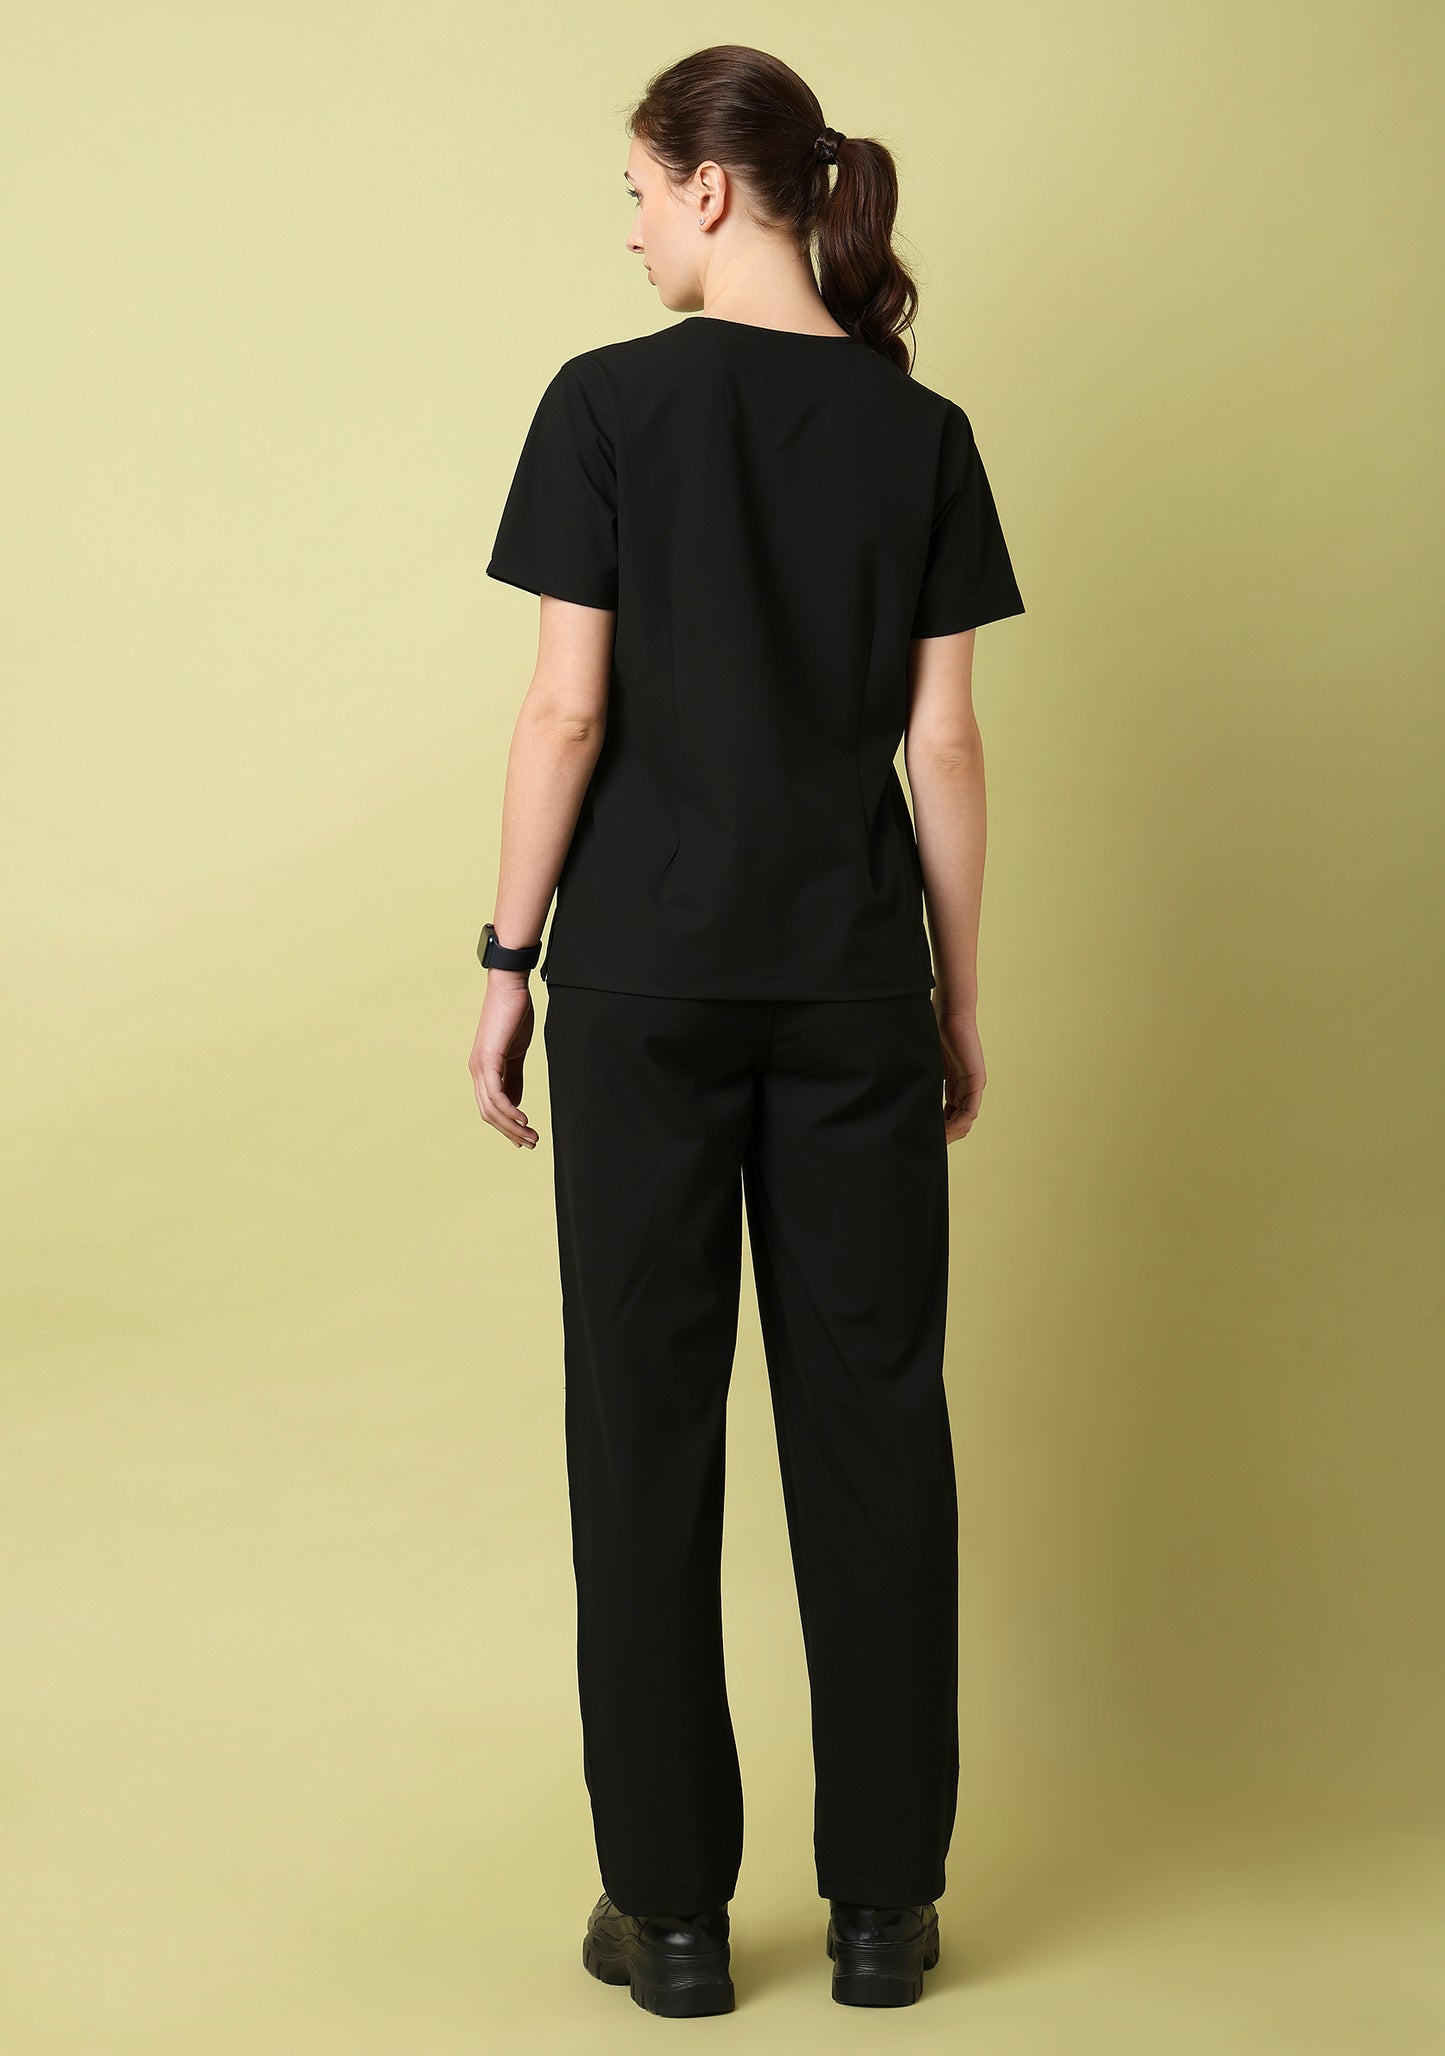 Ecoflex Women's 5 Pocket (Black) Scrub